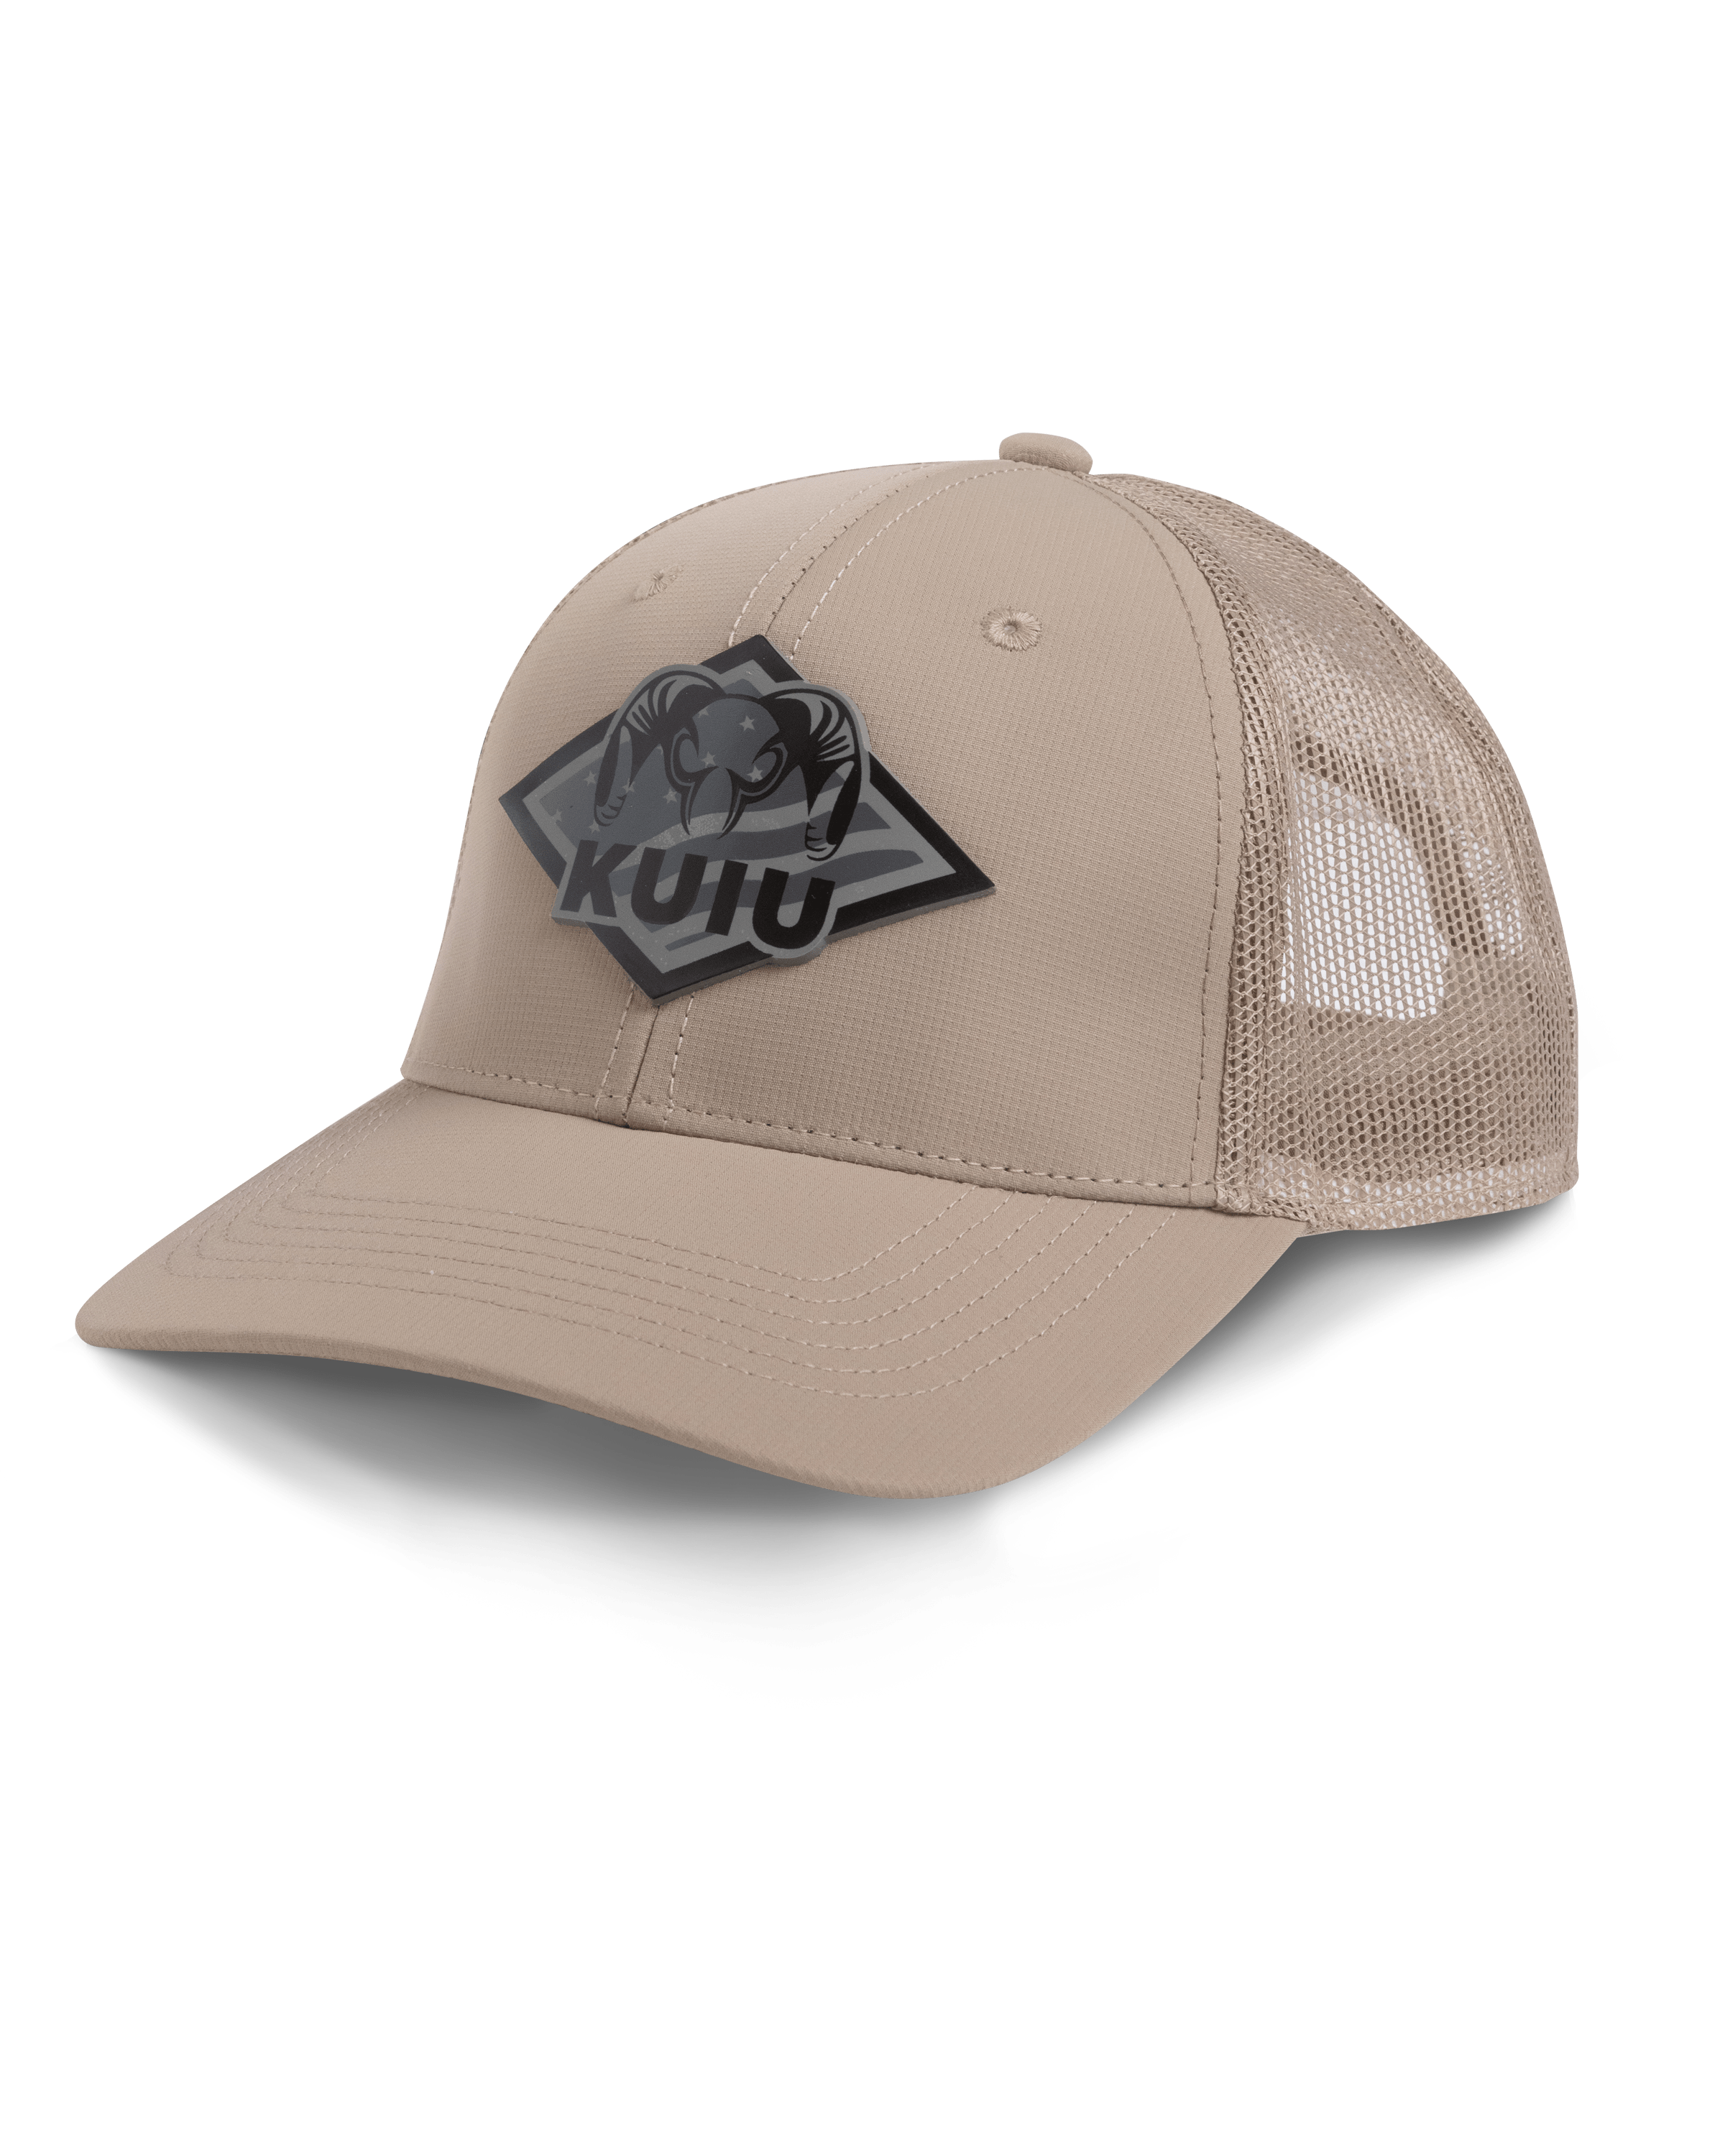 KUIU Grayscale Diamond Flag Hat | Khaki